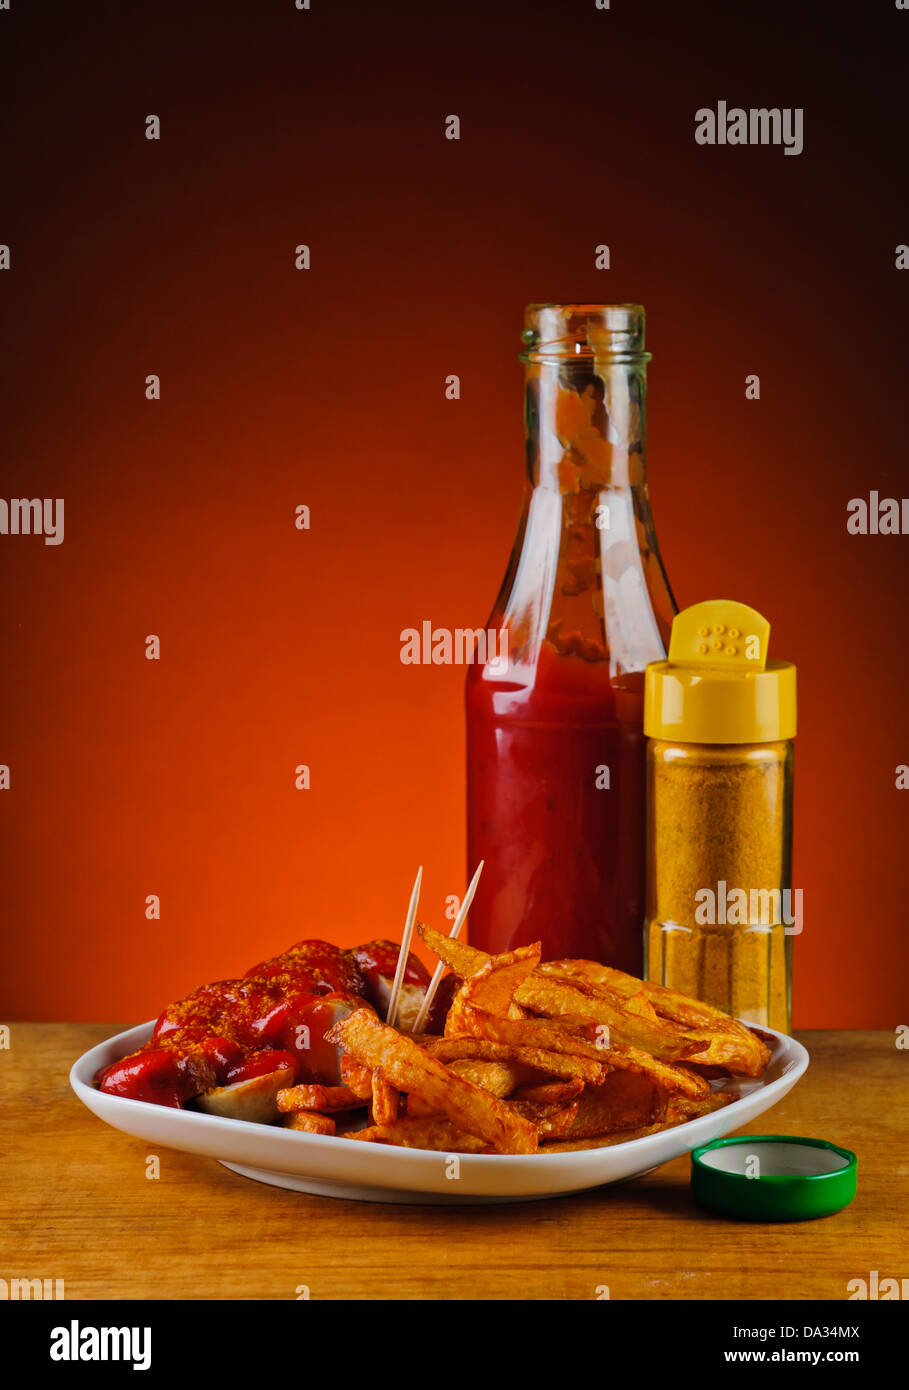 Curry o salchichas currywurst con papas fritas y salsa ketchup. Foto de stock